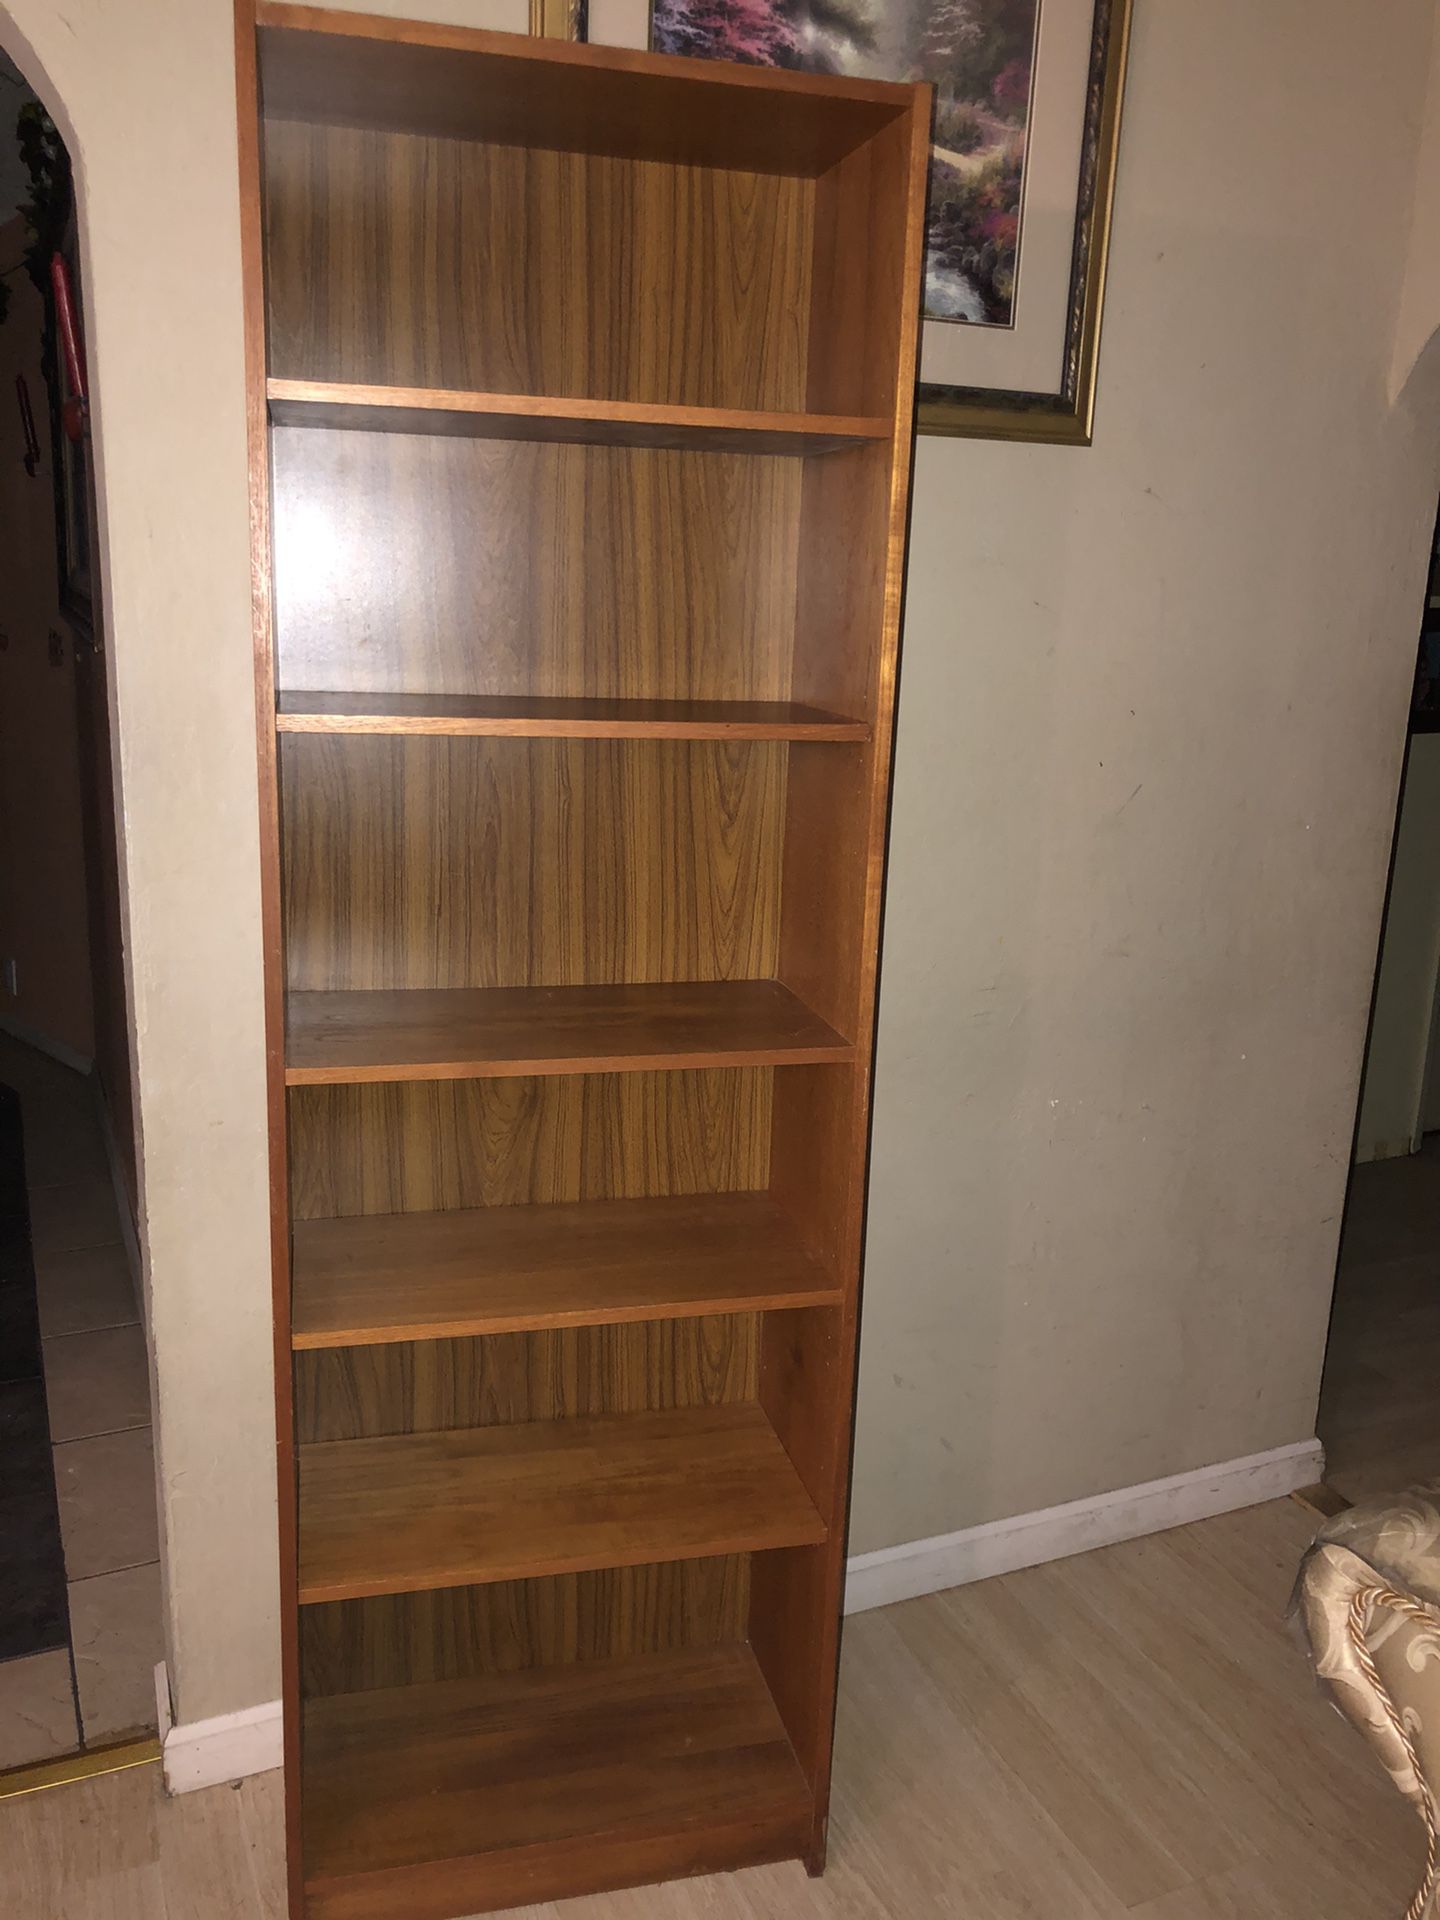 Bookshelf with adjustable/removable shelves!!